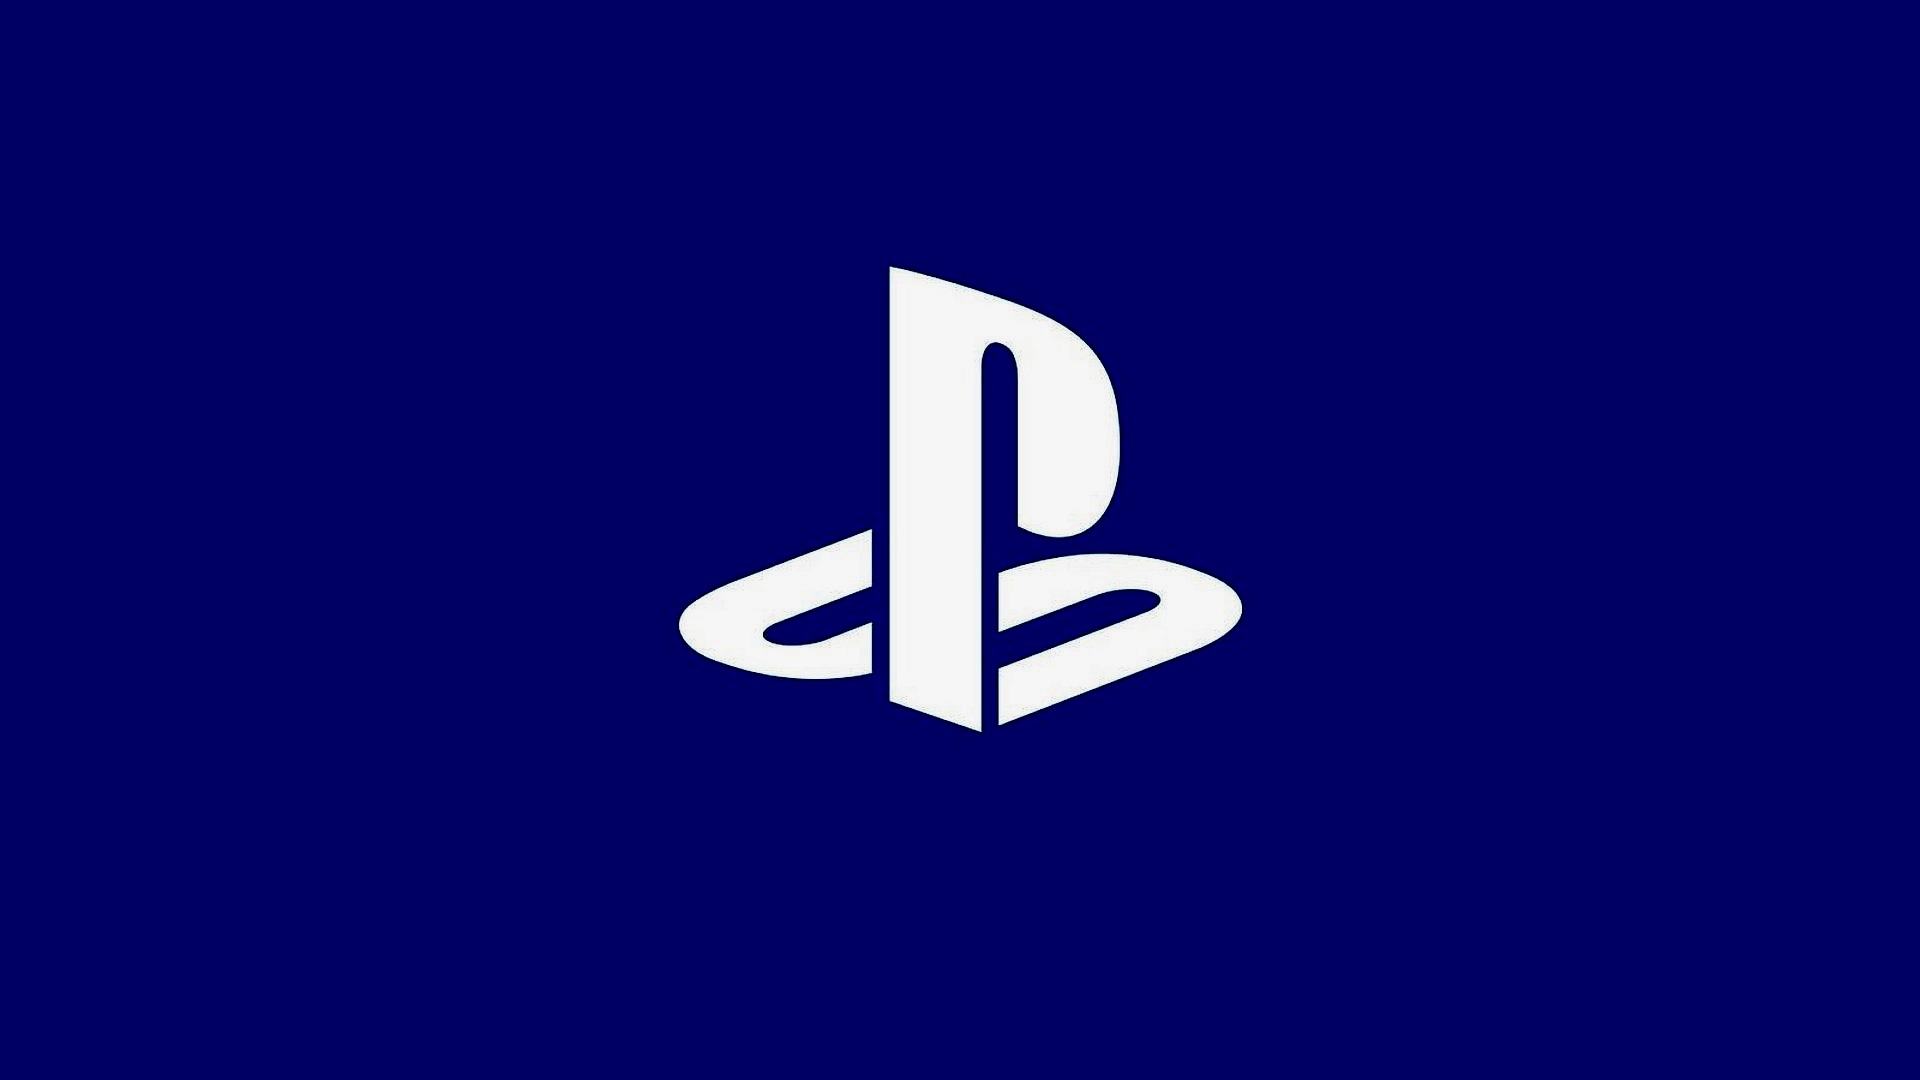 Logotipo da Playstation